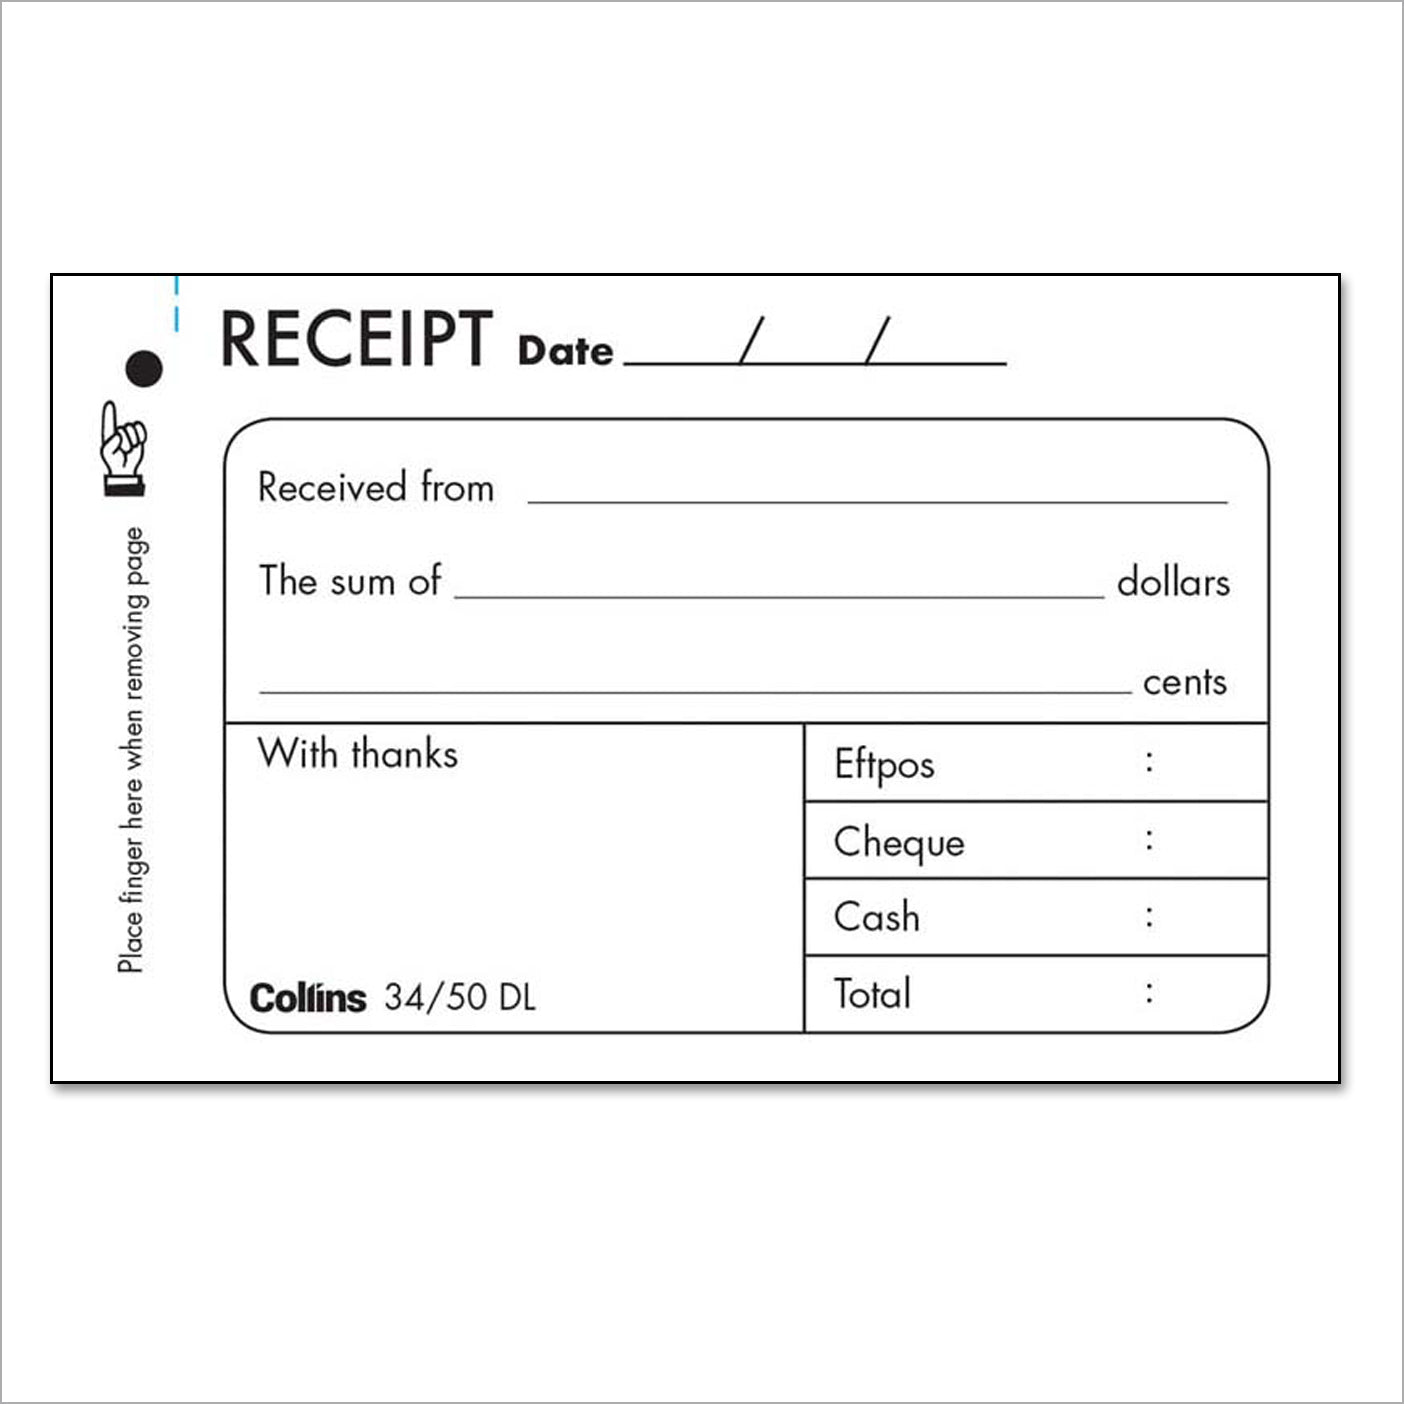 Collins Cash Receipt 34/50DL Carbon Required 50 Duplicate Receipts